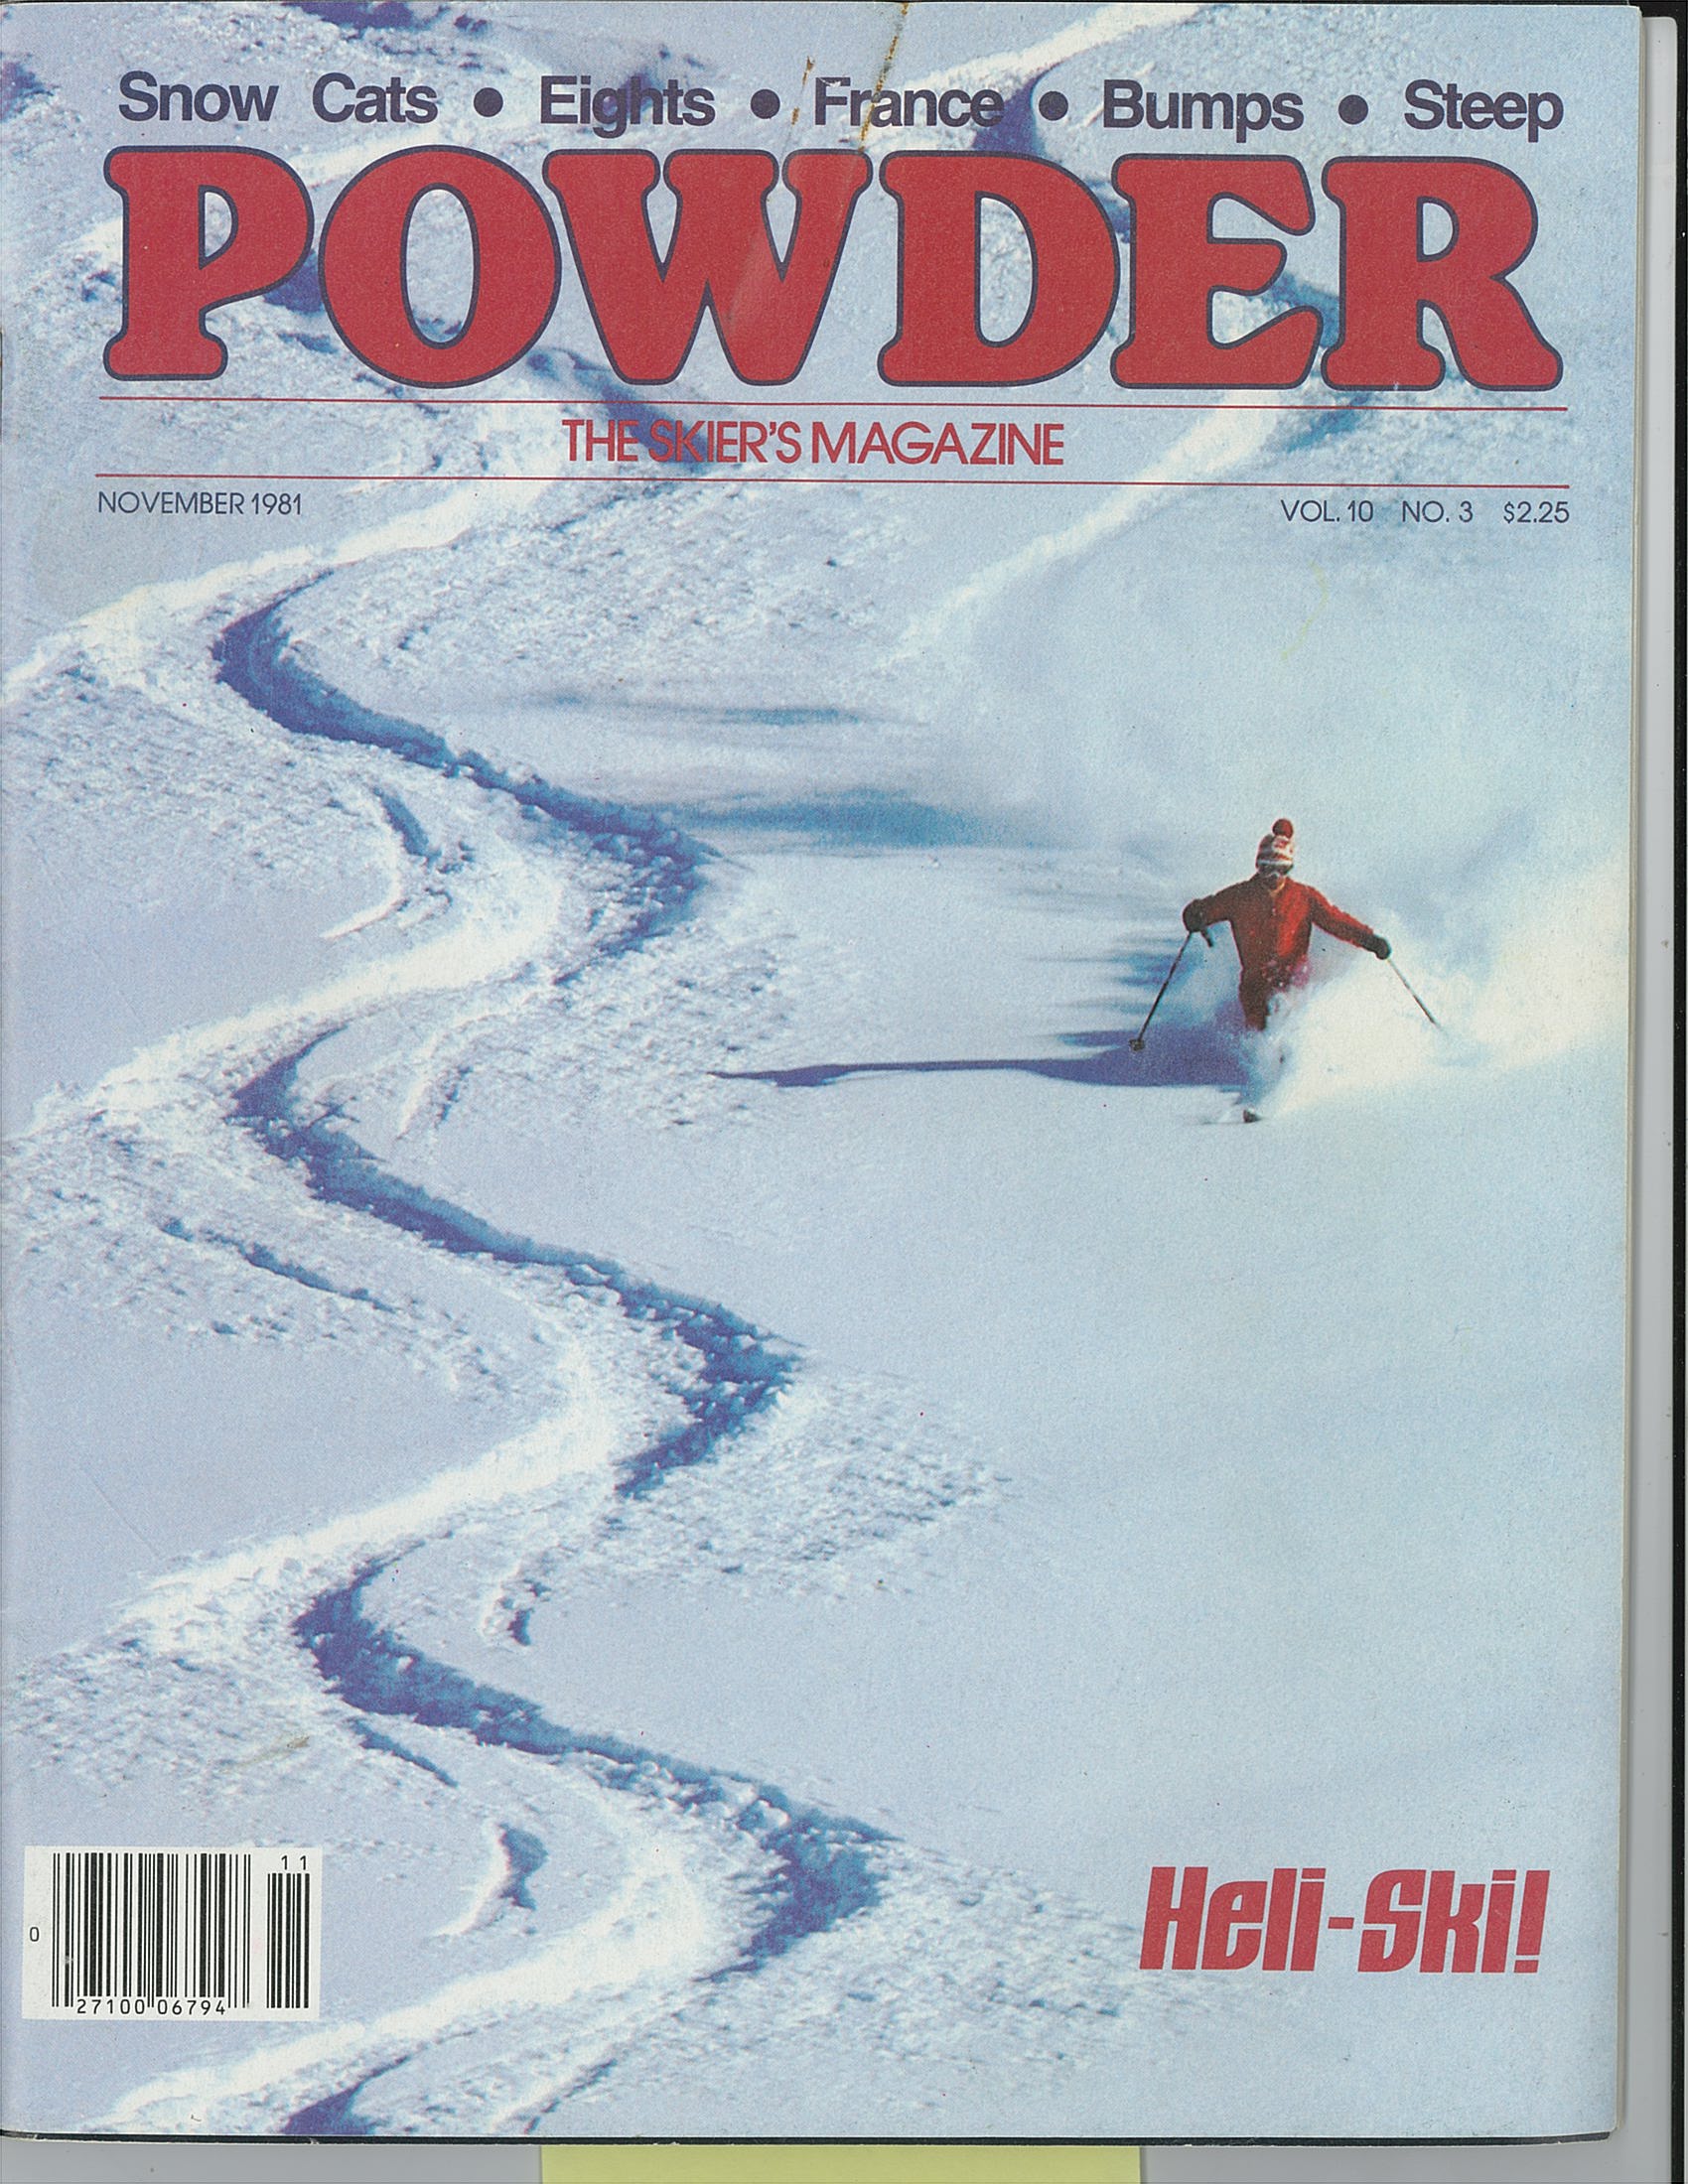 1981 - Powder_Page_1.jpg